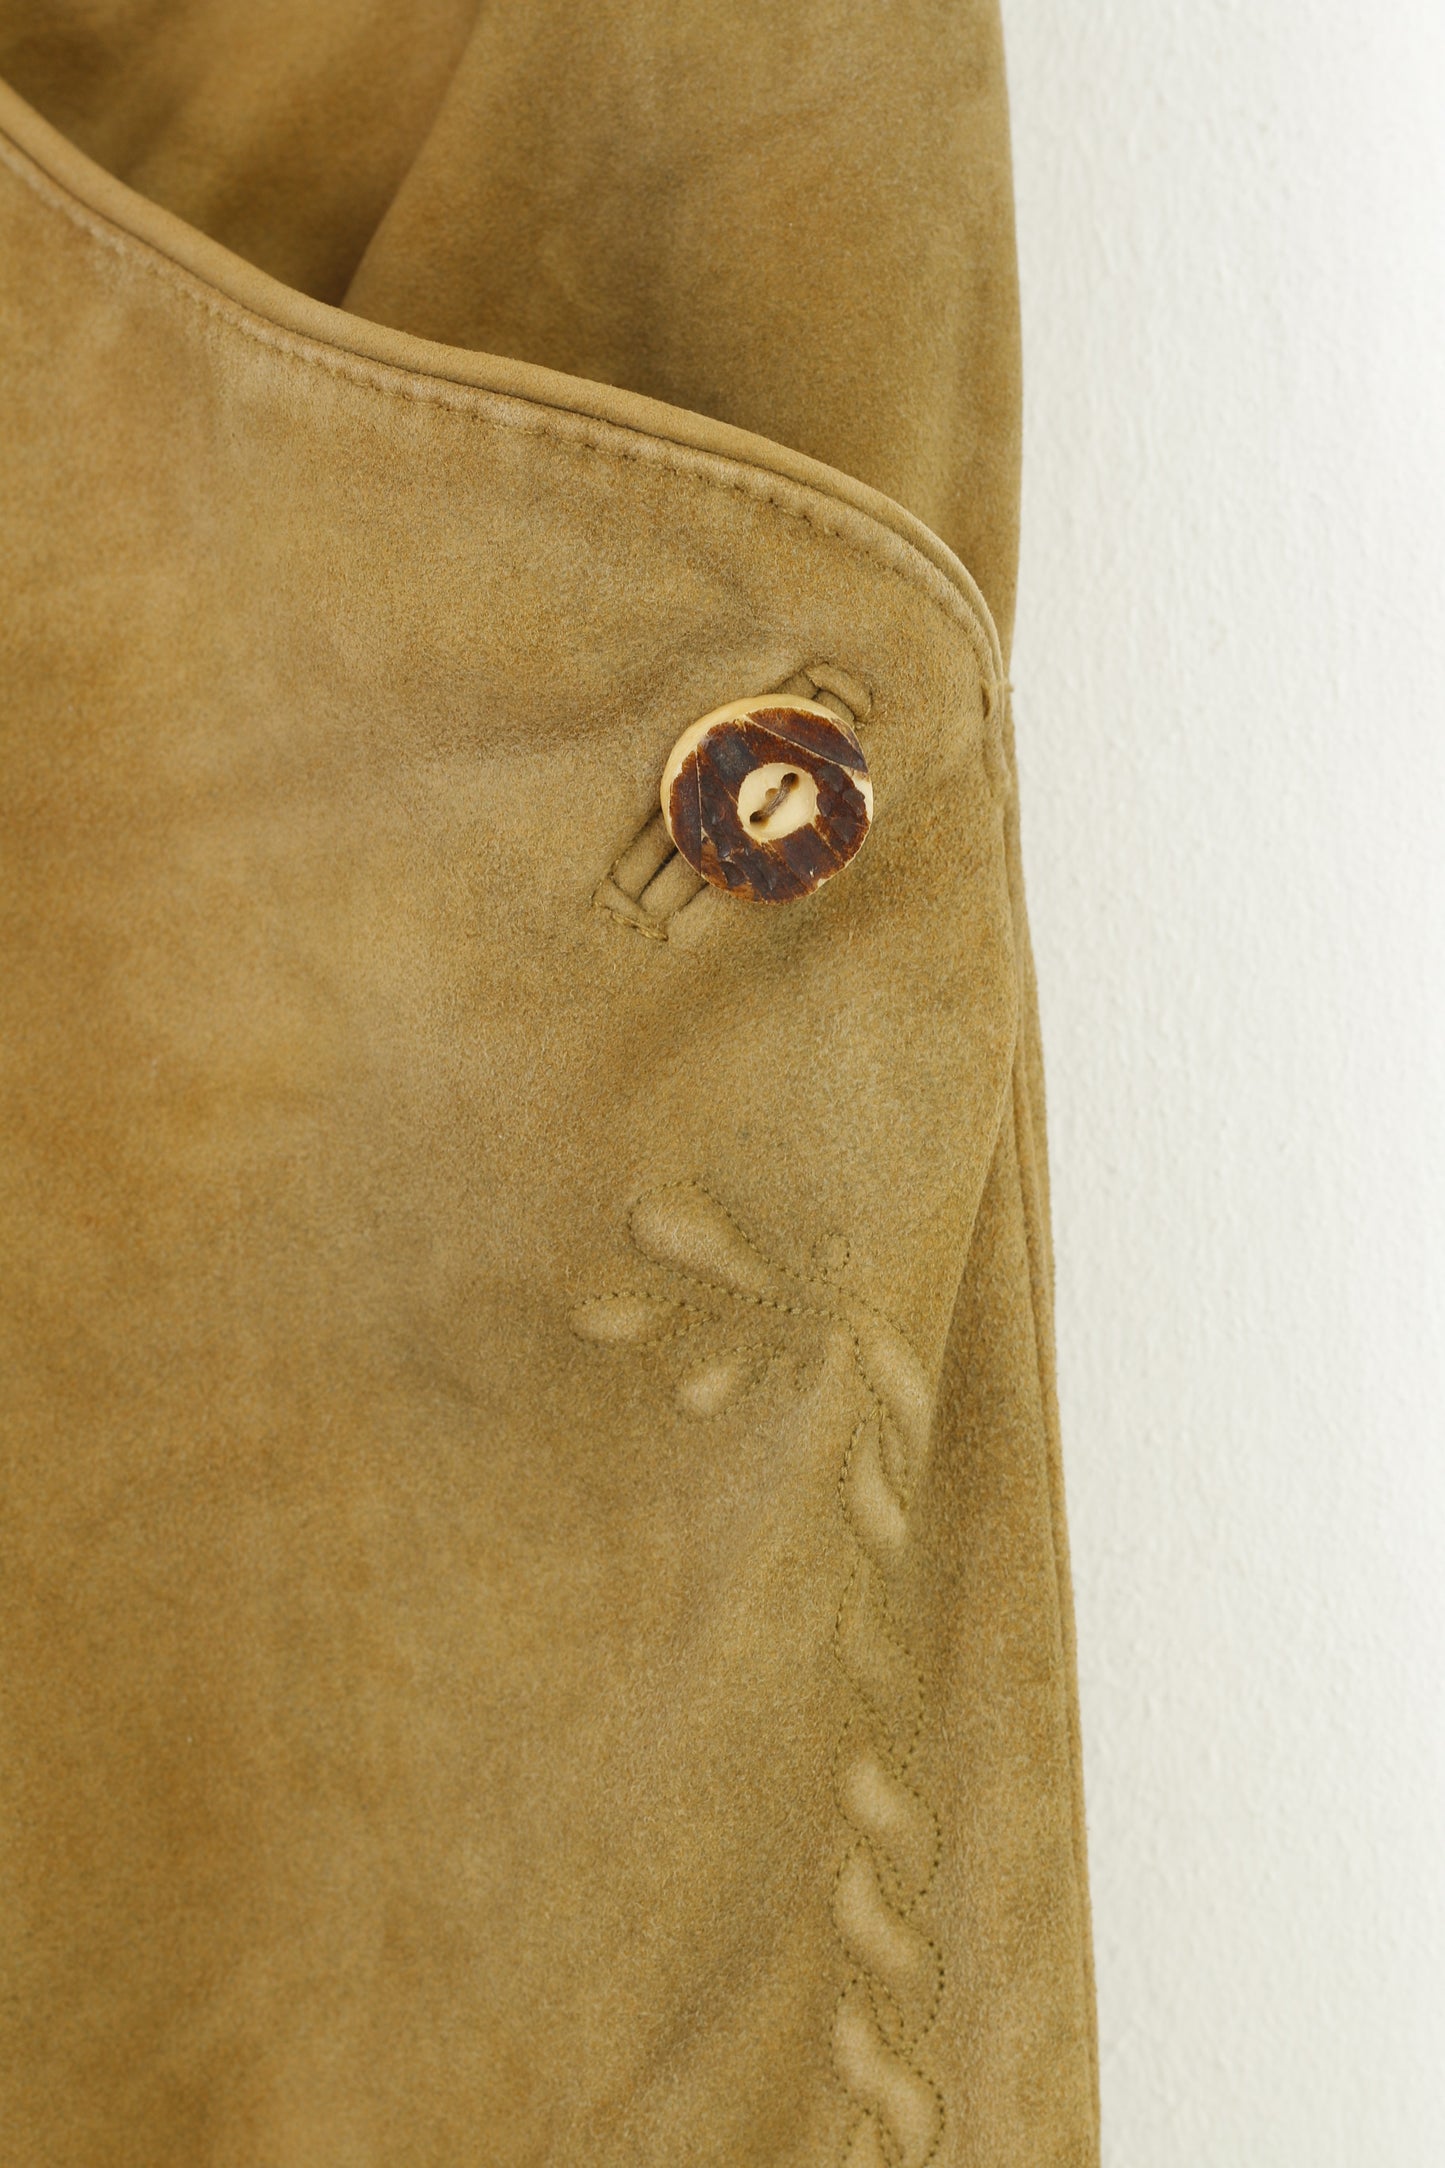 Pollinger Men 46 Leather Trousers Brown Vintage Tyrol Austria Trachten Western Cowboy Traditional Emroidered Bottoms Pockets